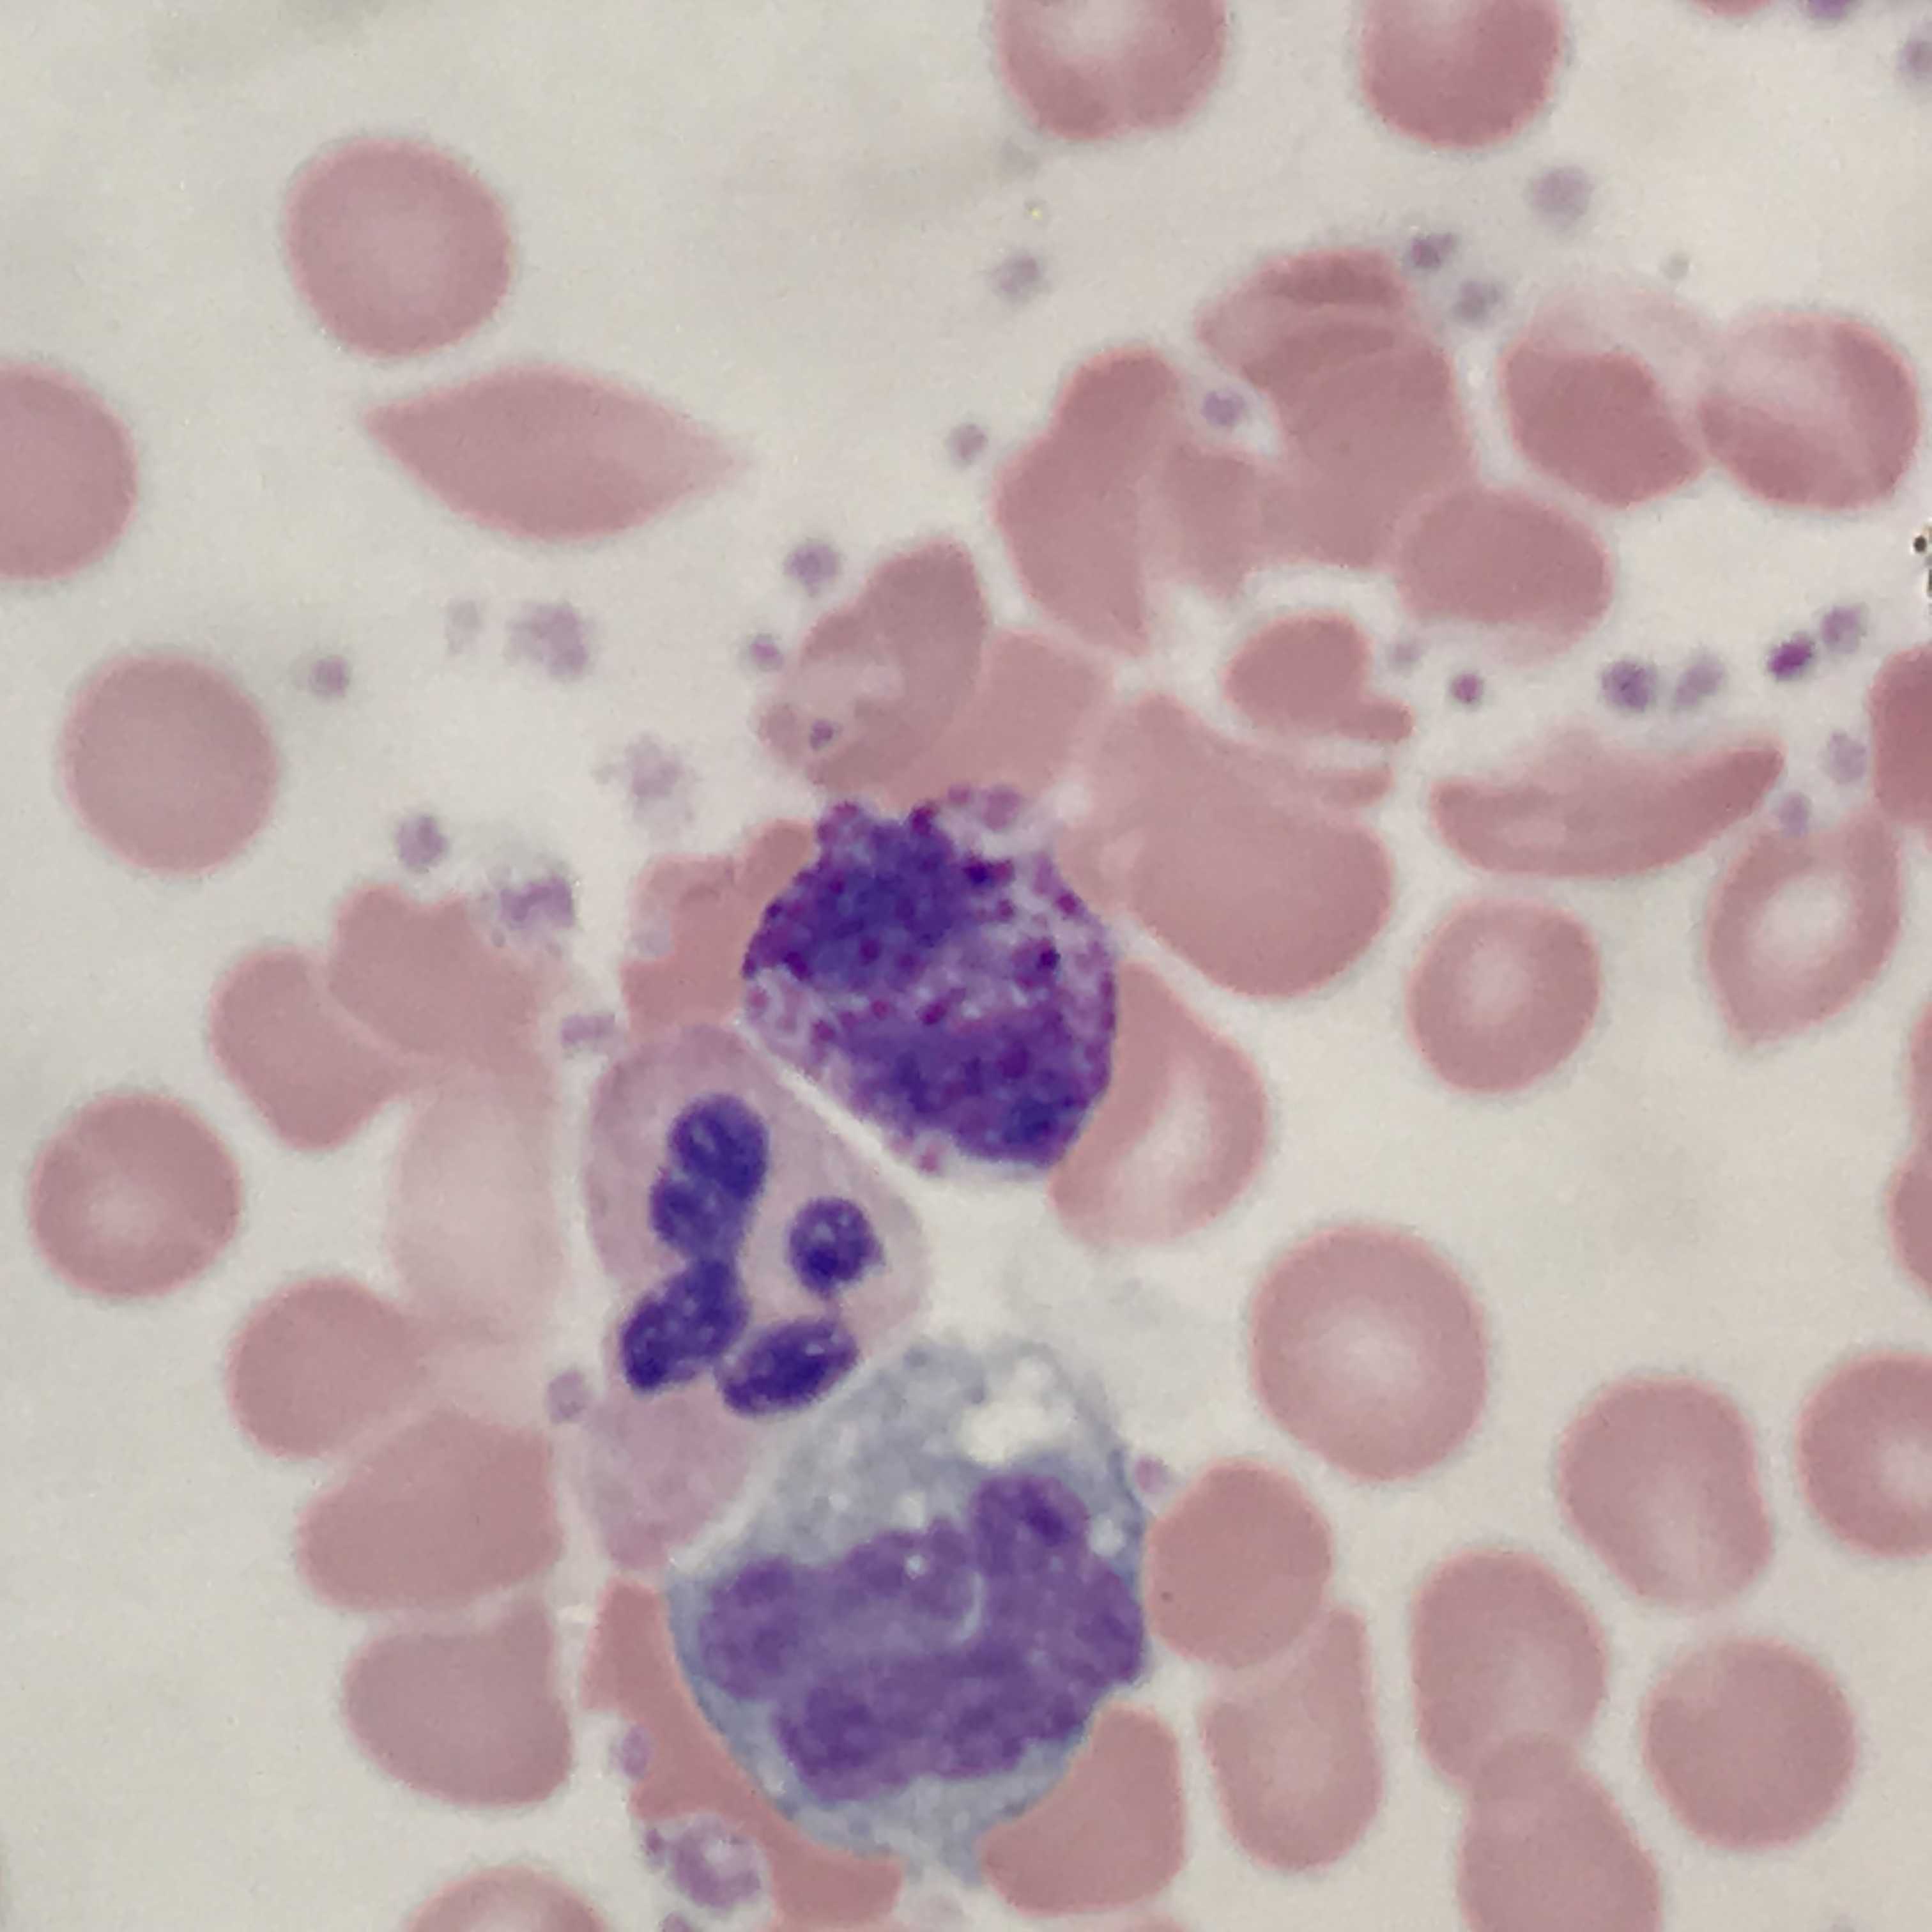 Basophil (center) with adjacent neutrophil and monocyte